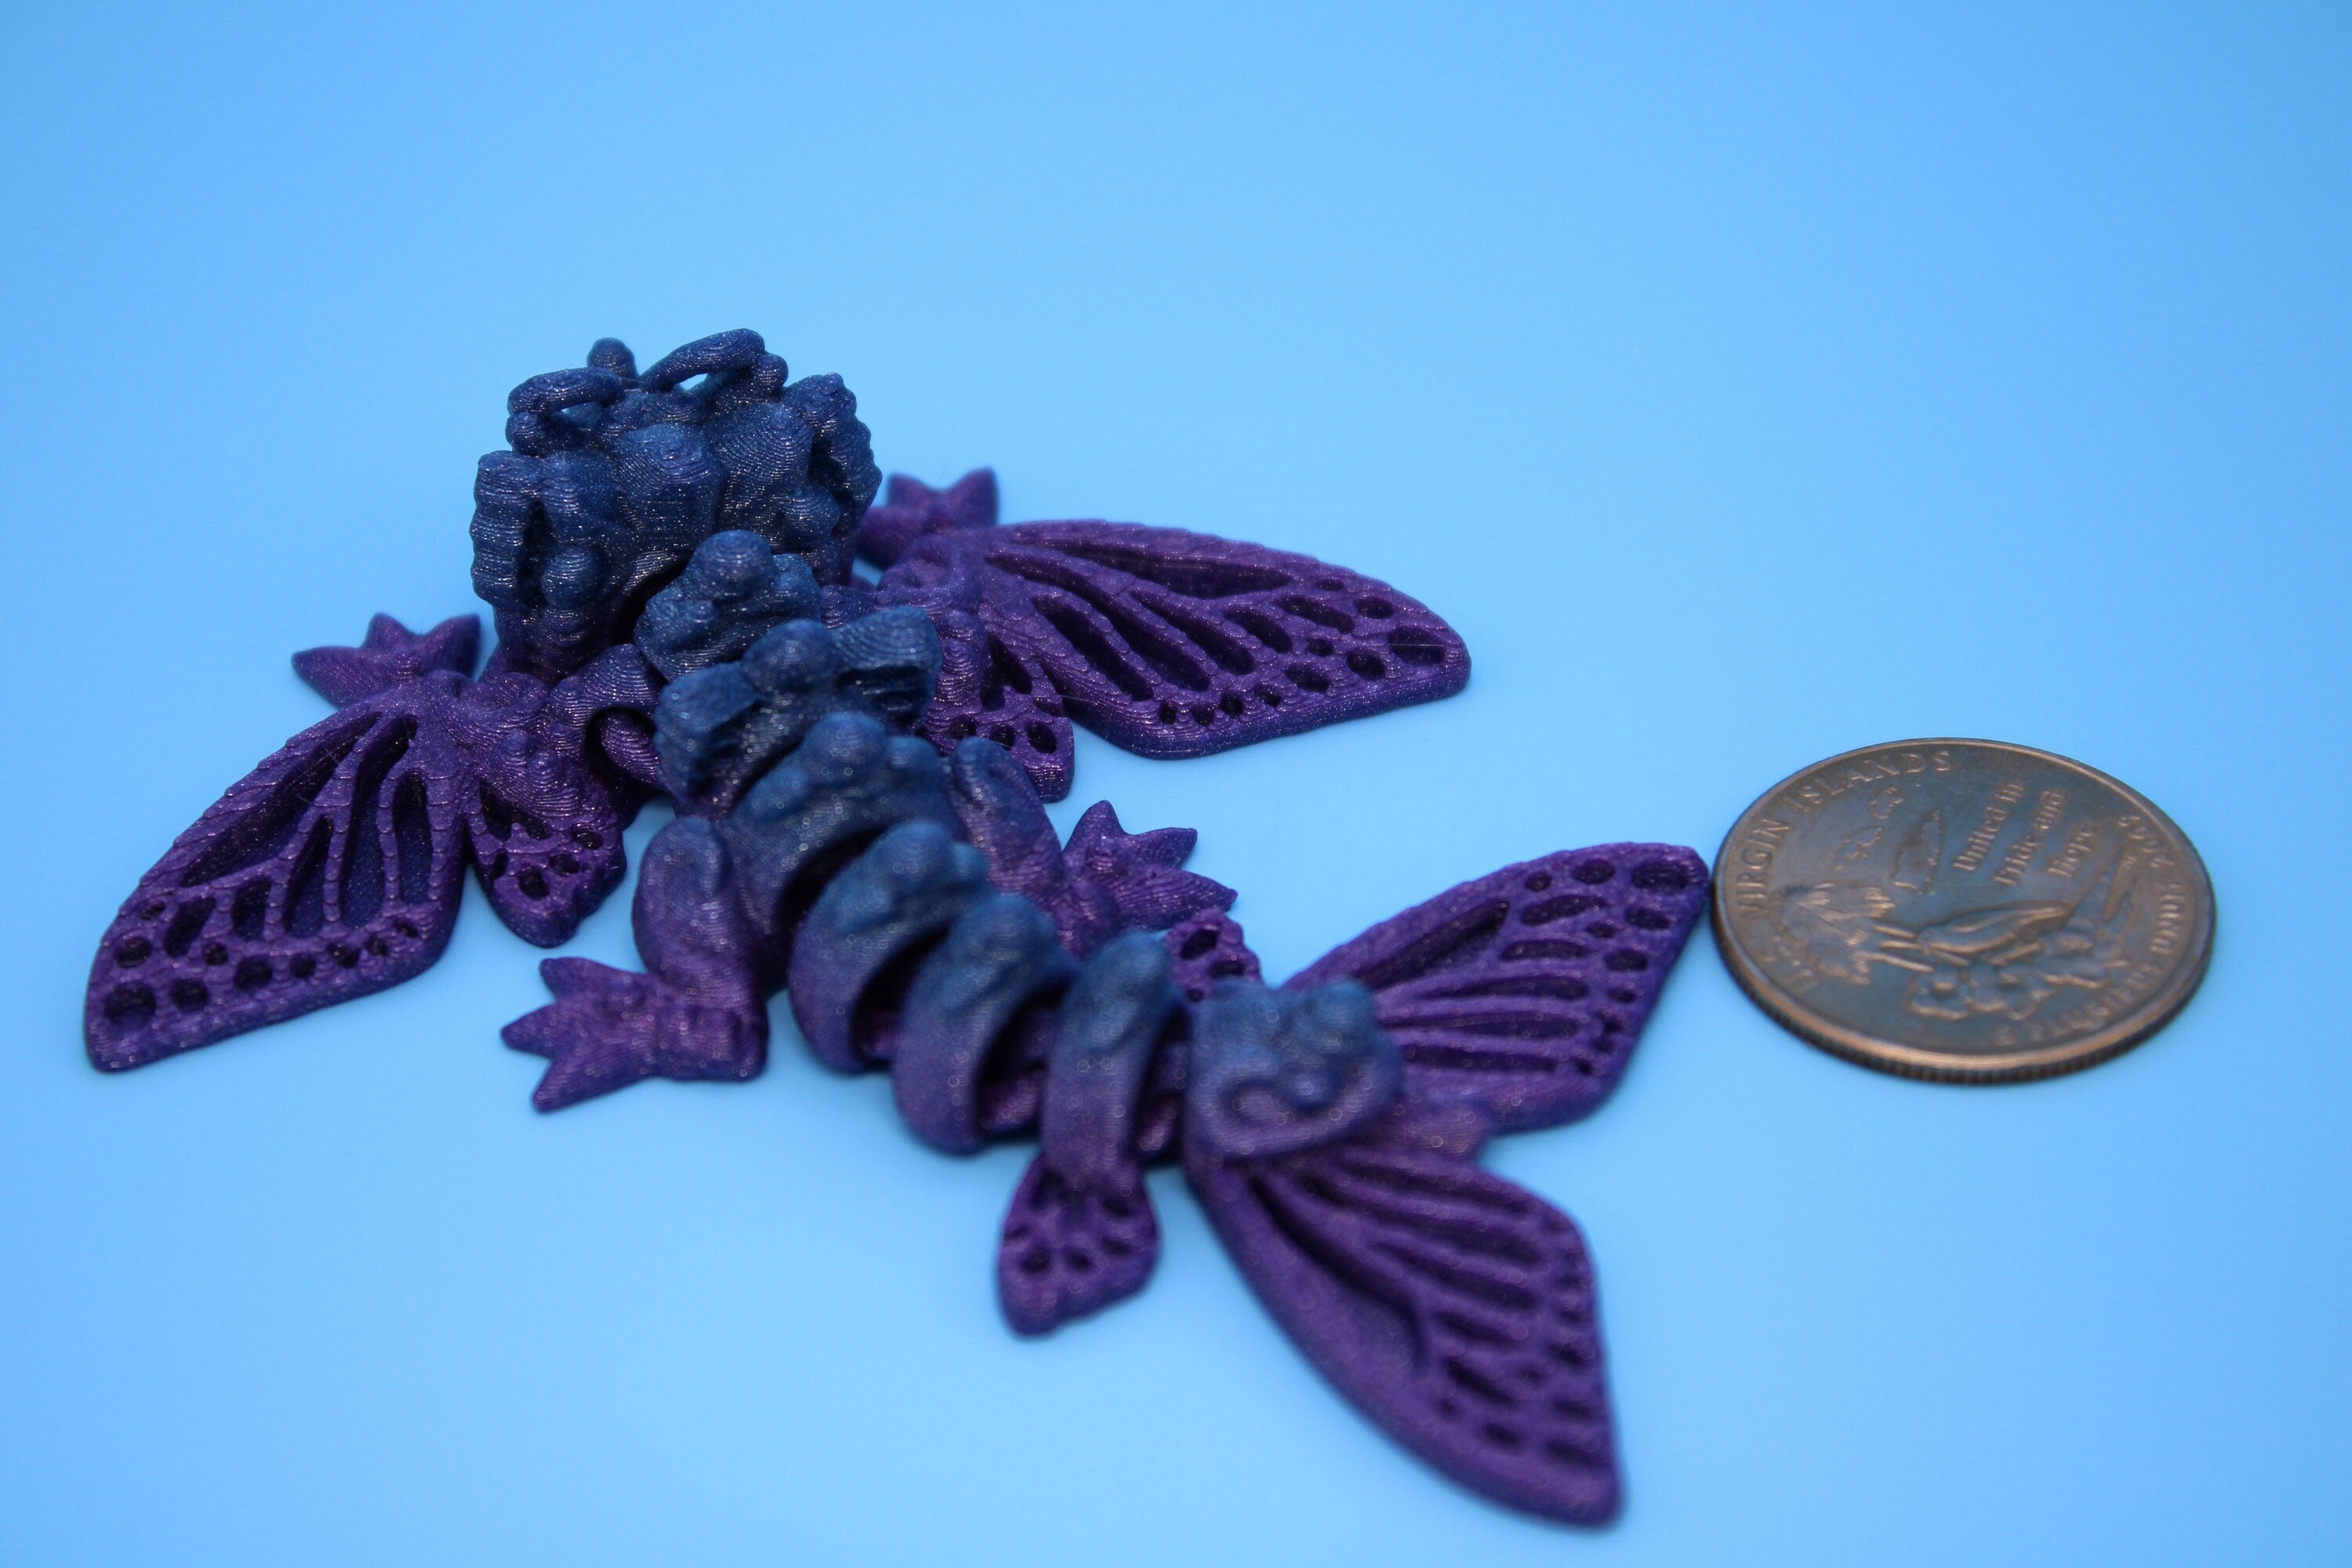 Butterfly Wyvern | Miniature | 3D Printed | Wyvern Dragon | 3.25 in. | Dragon Toy | Fidget Toy | Flexi Dragon.